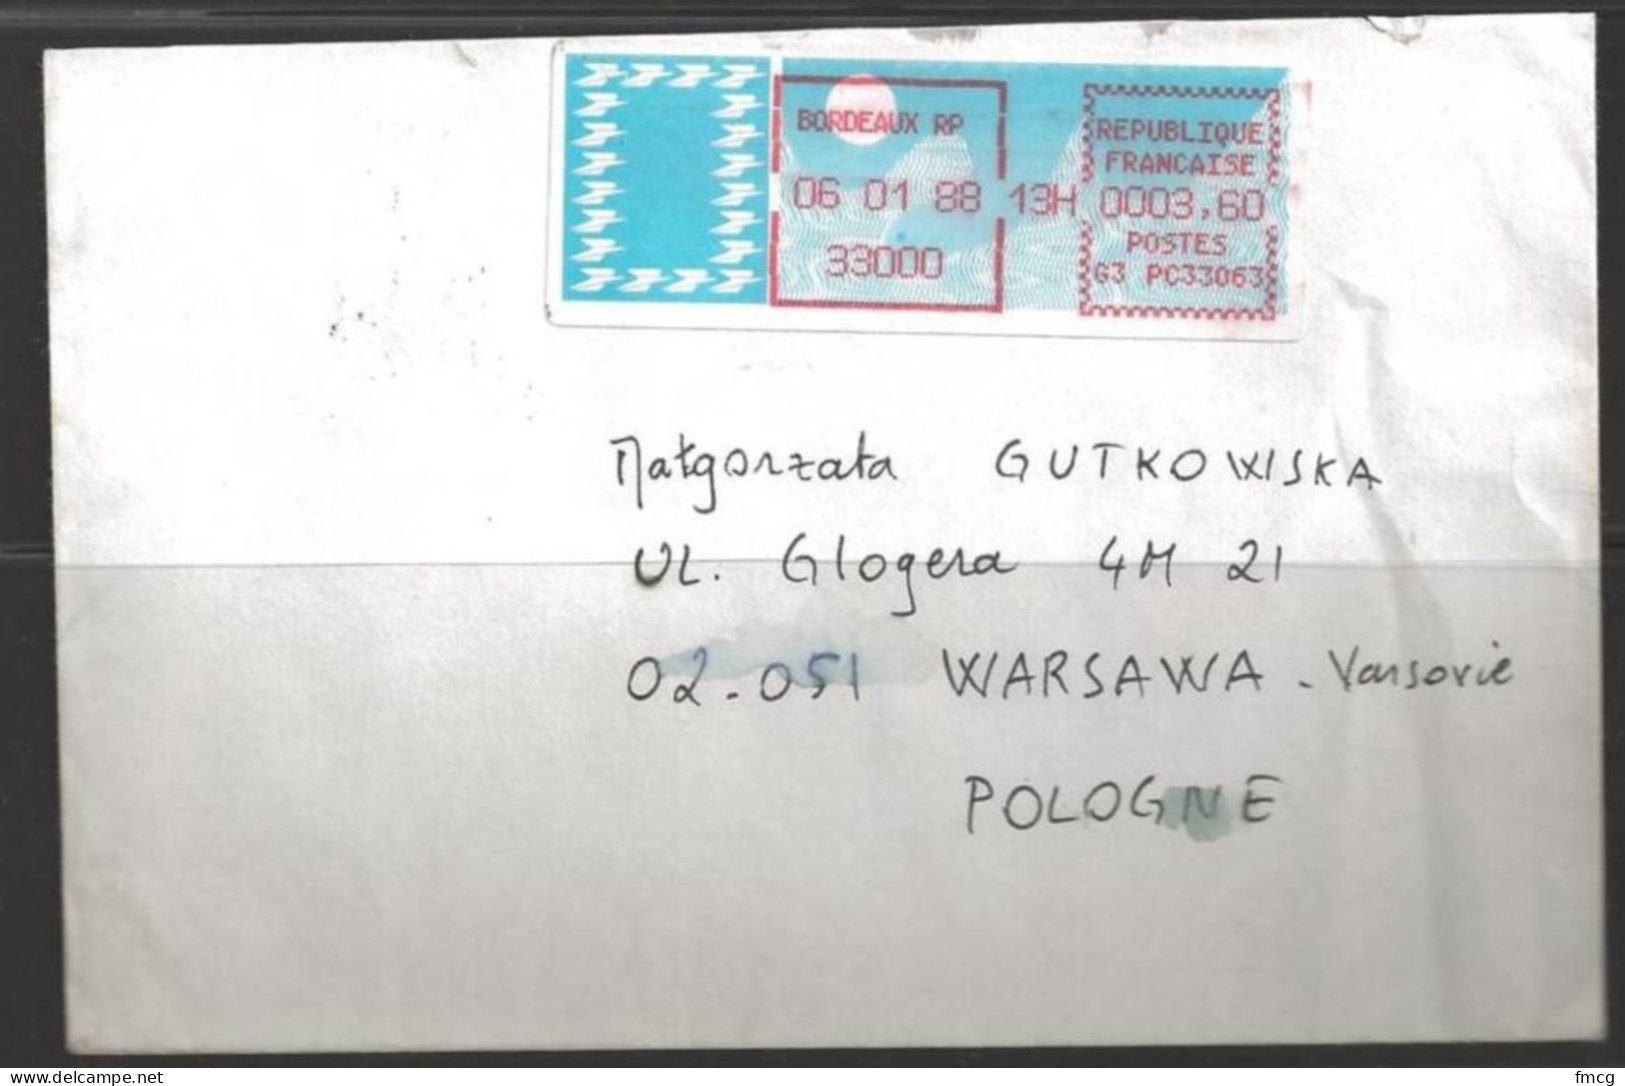 1988 Bordeaux Meter (06 01 88) To Warsawa Poland - Lettres & Documents